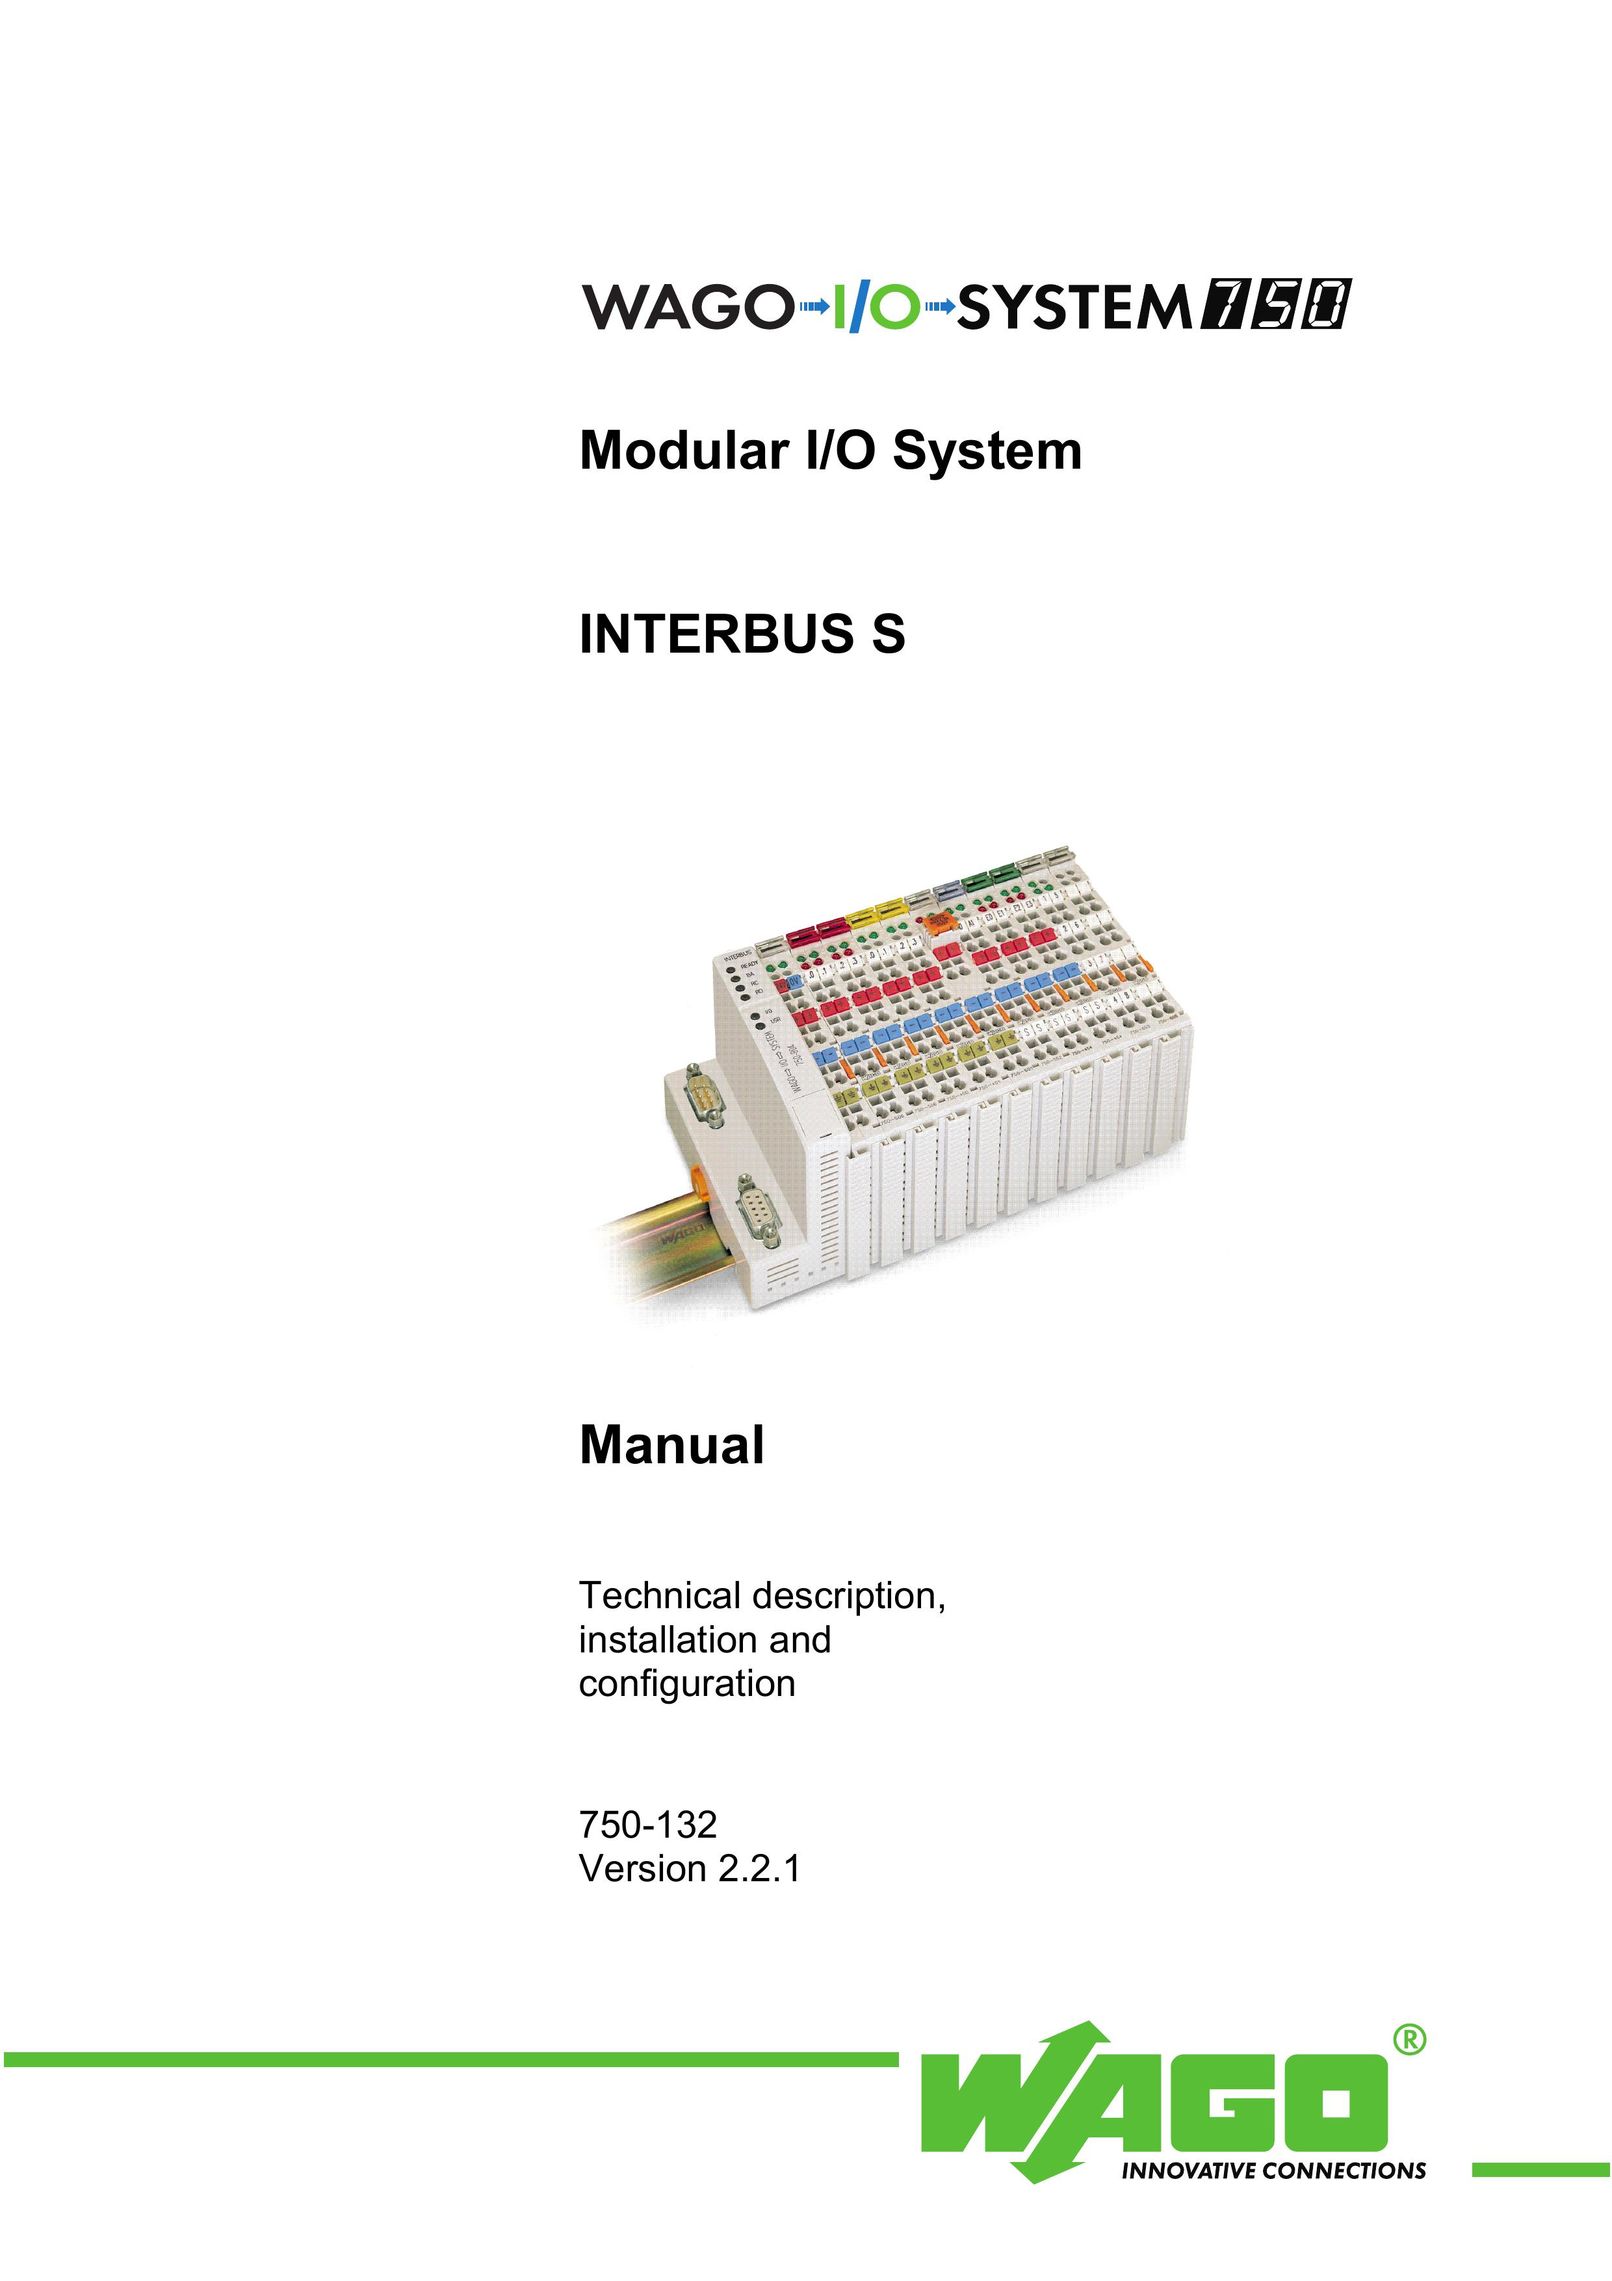 Quatech INTERBUS S Network Card User Manual